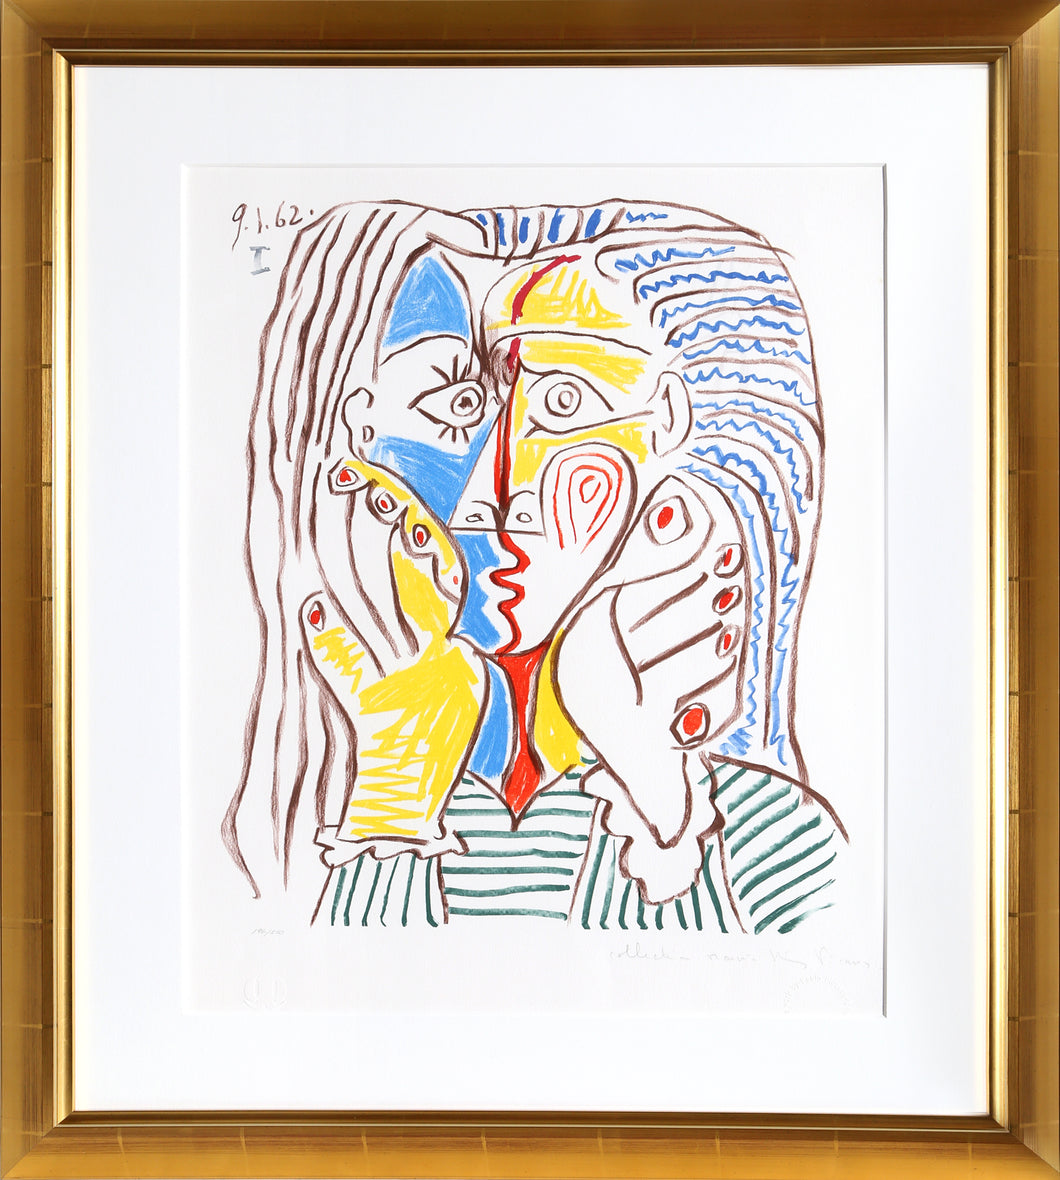 Pablo Picasso, Visage, 39-8, Lithograph on Arches Paper